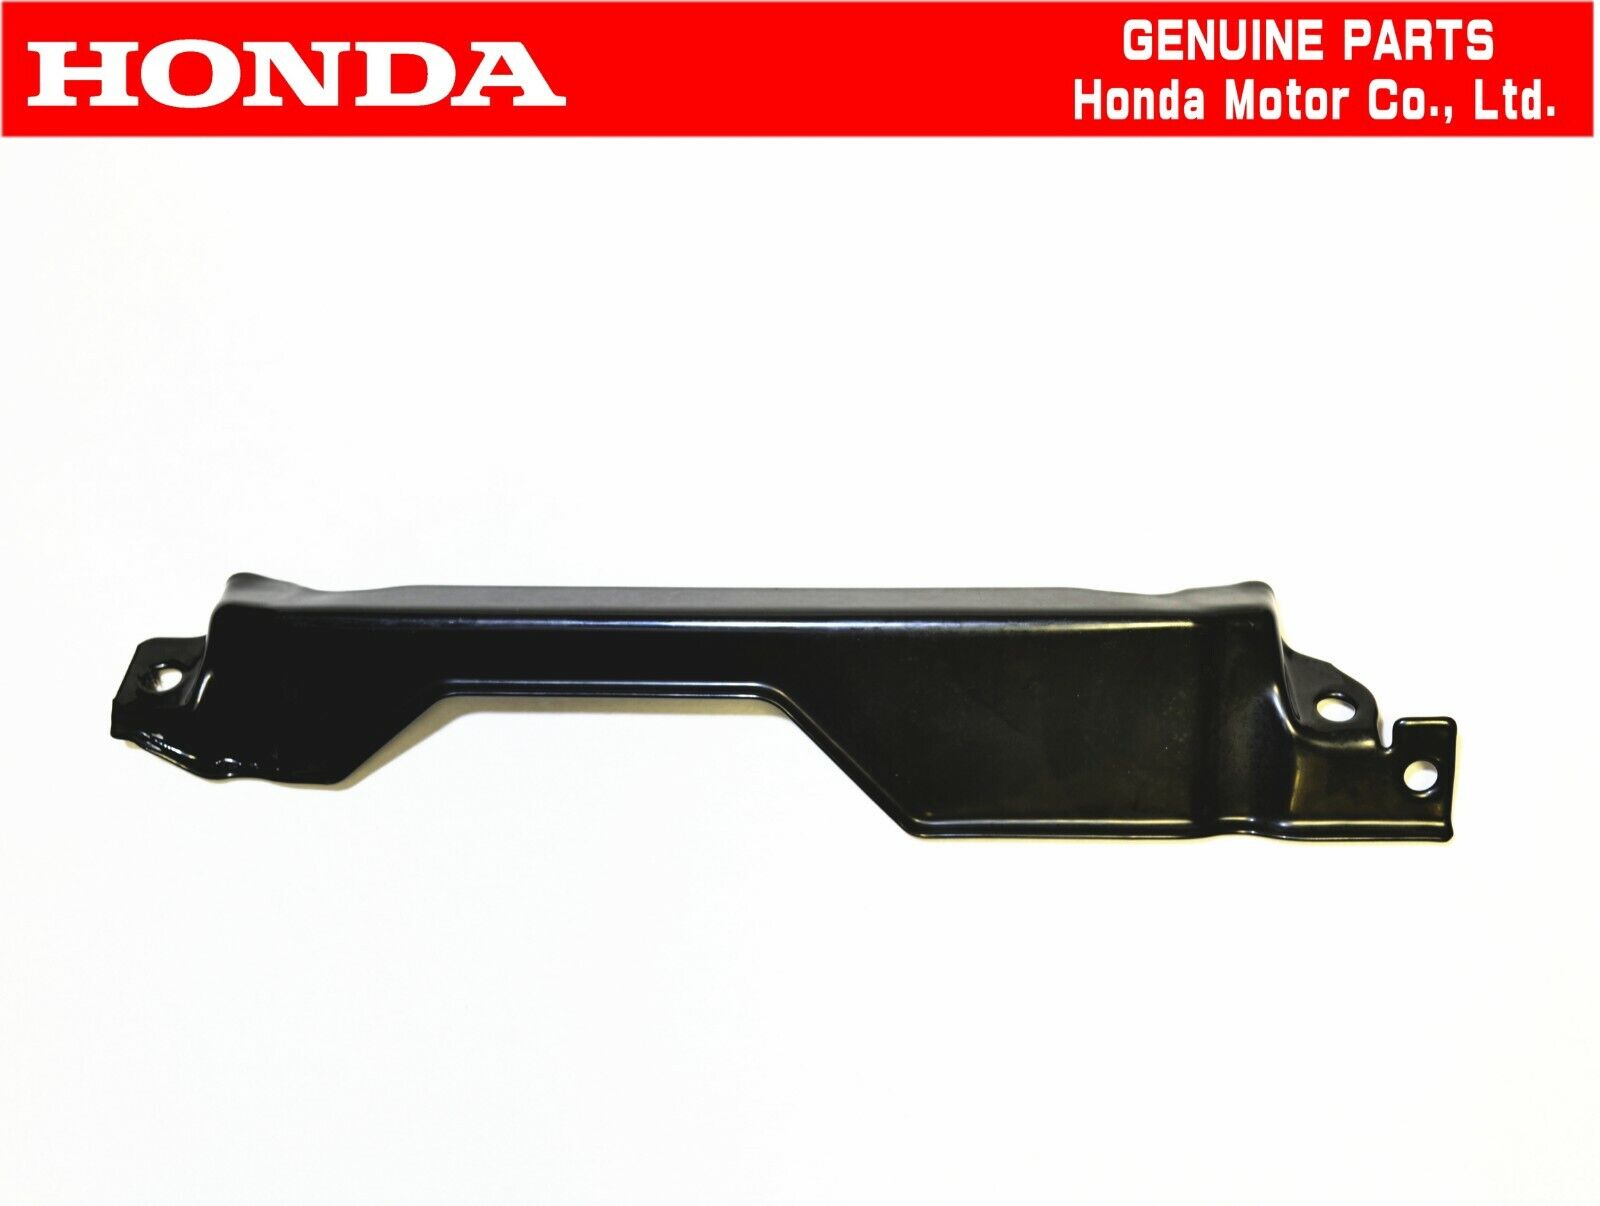 HONDA ACURA GENUINE 99 NSX Alex Zanardi Edition Battery Hold Down Plate OEM